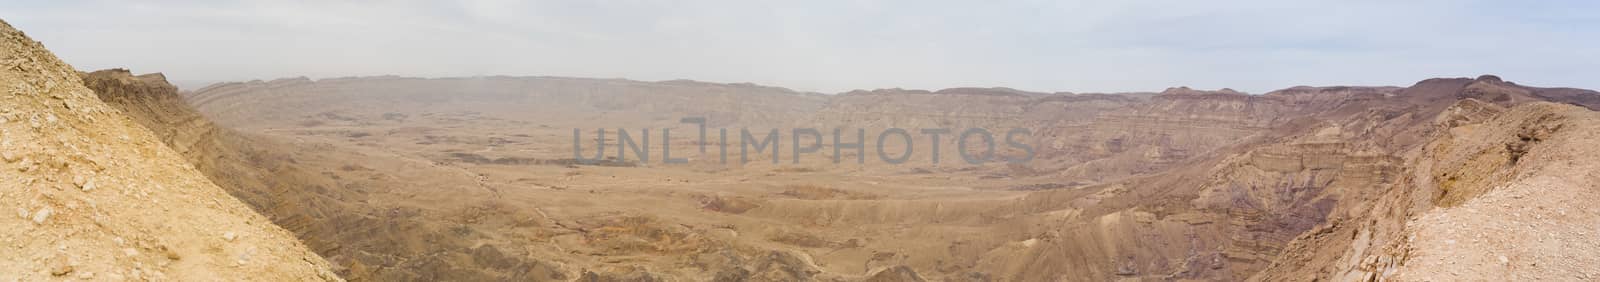 Travel in Israel negev desert landscape by javax